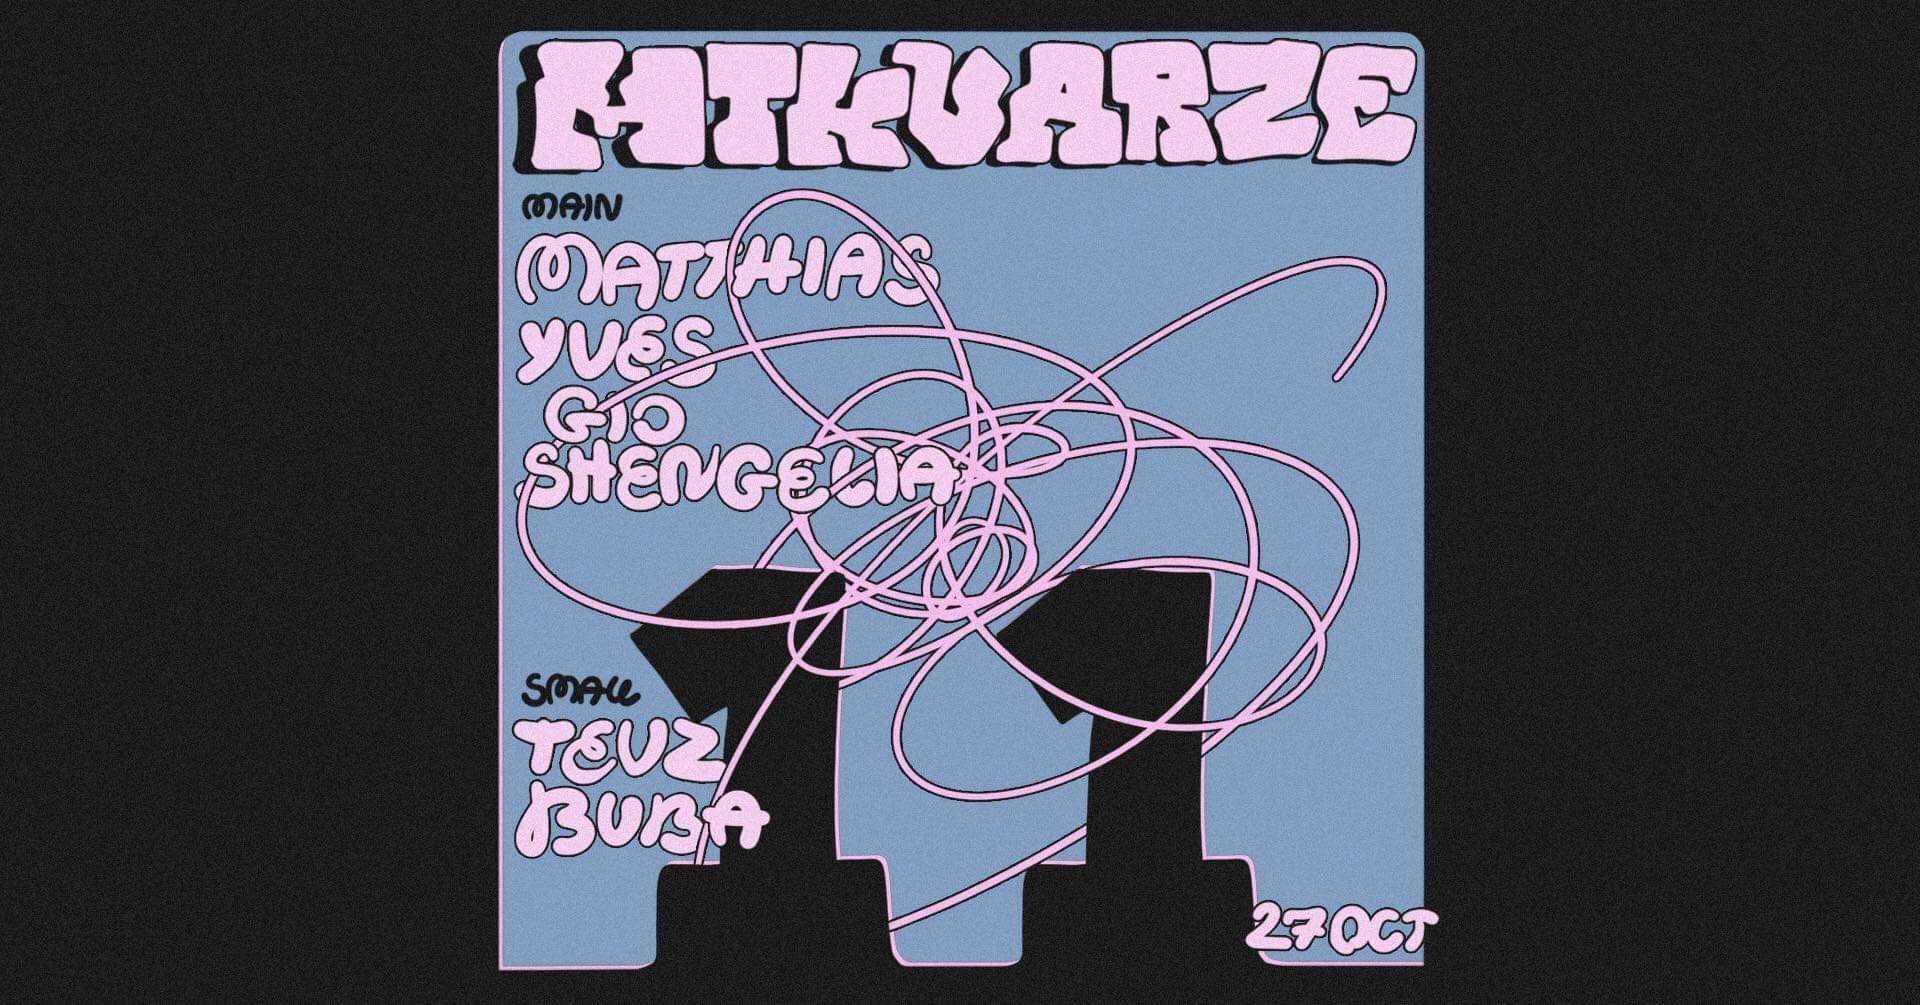 Mtkvarze 11th Anniversary: Matthias • Yves • Gio Shengelia • Tevz • Buba - フライヤー表